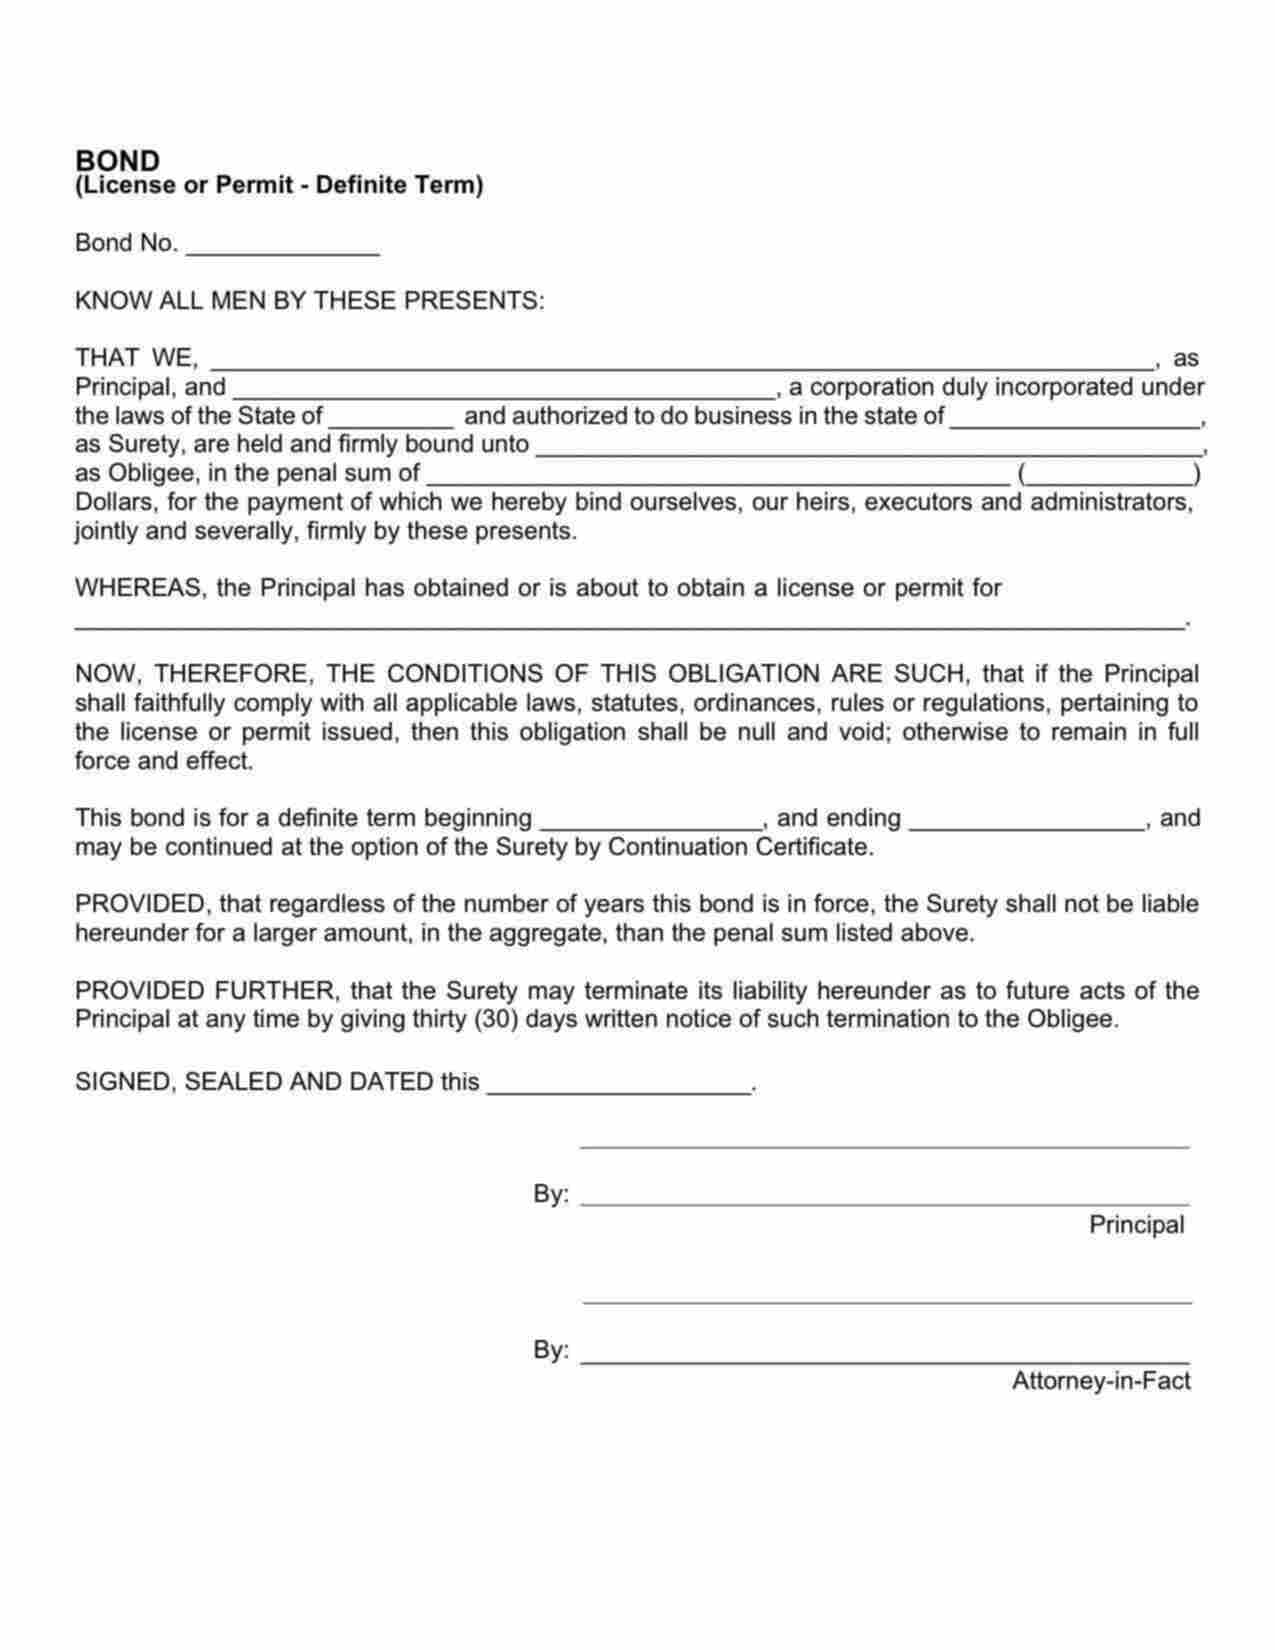 Pennsylvania License/Permit Bond Form